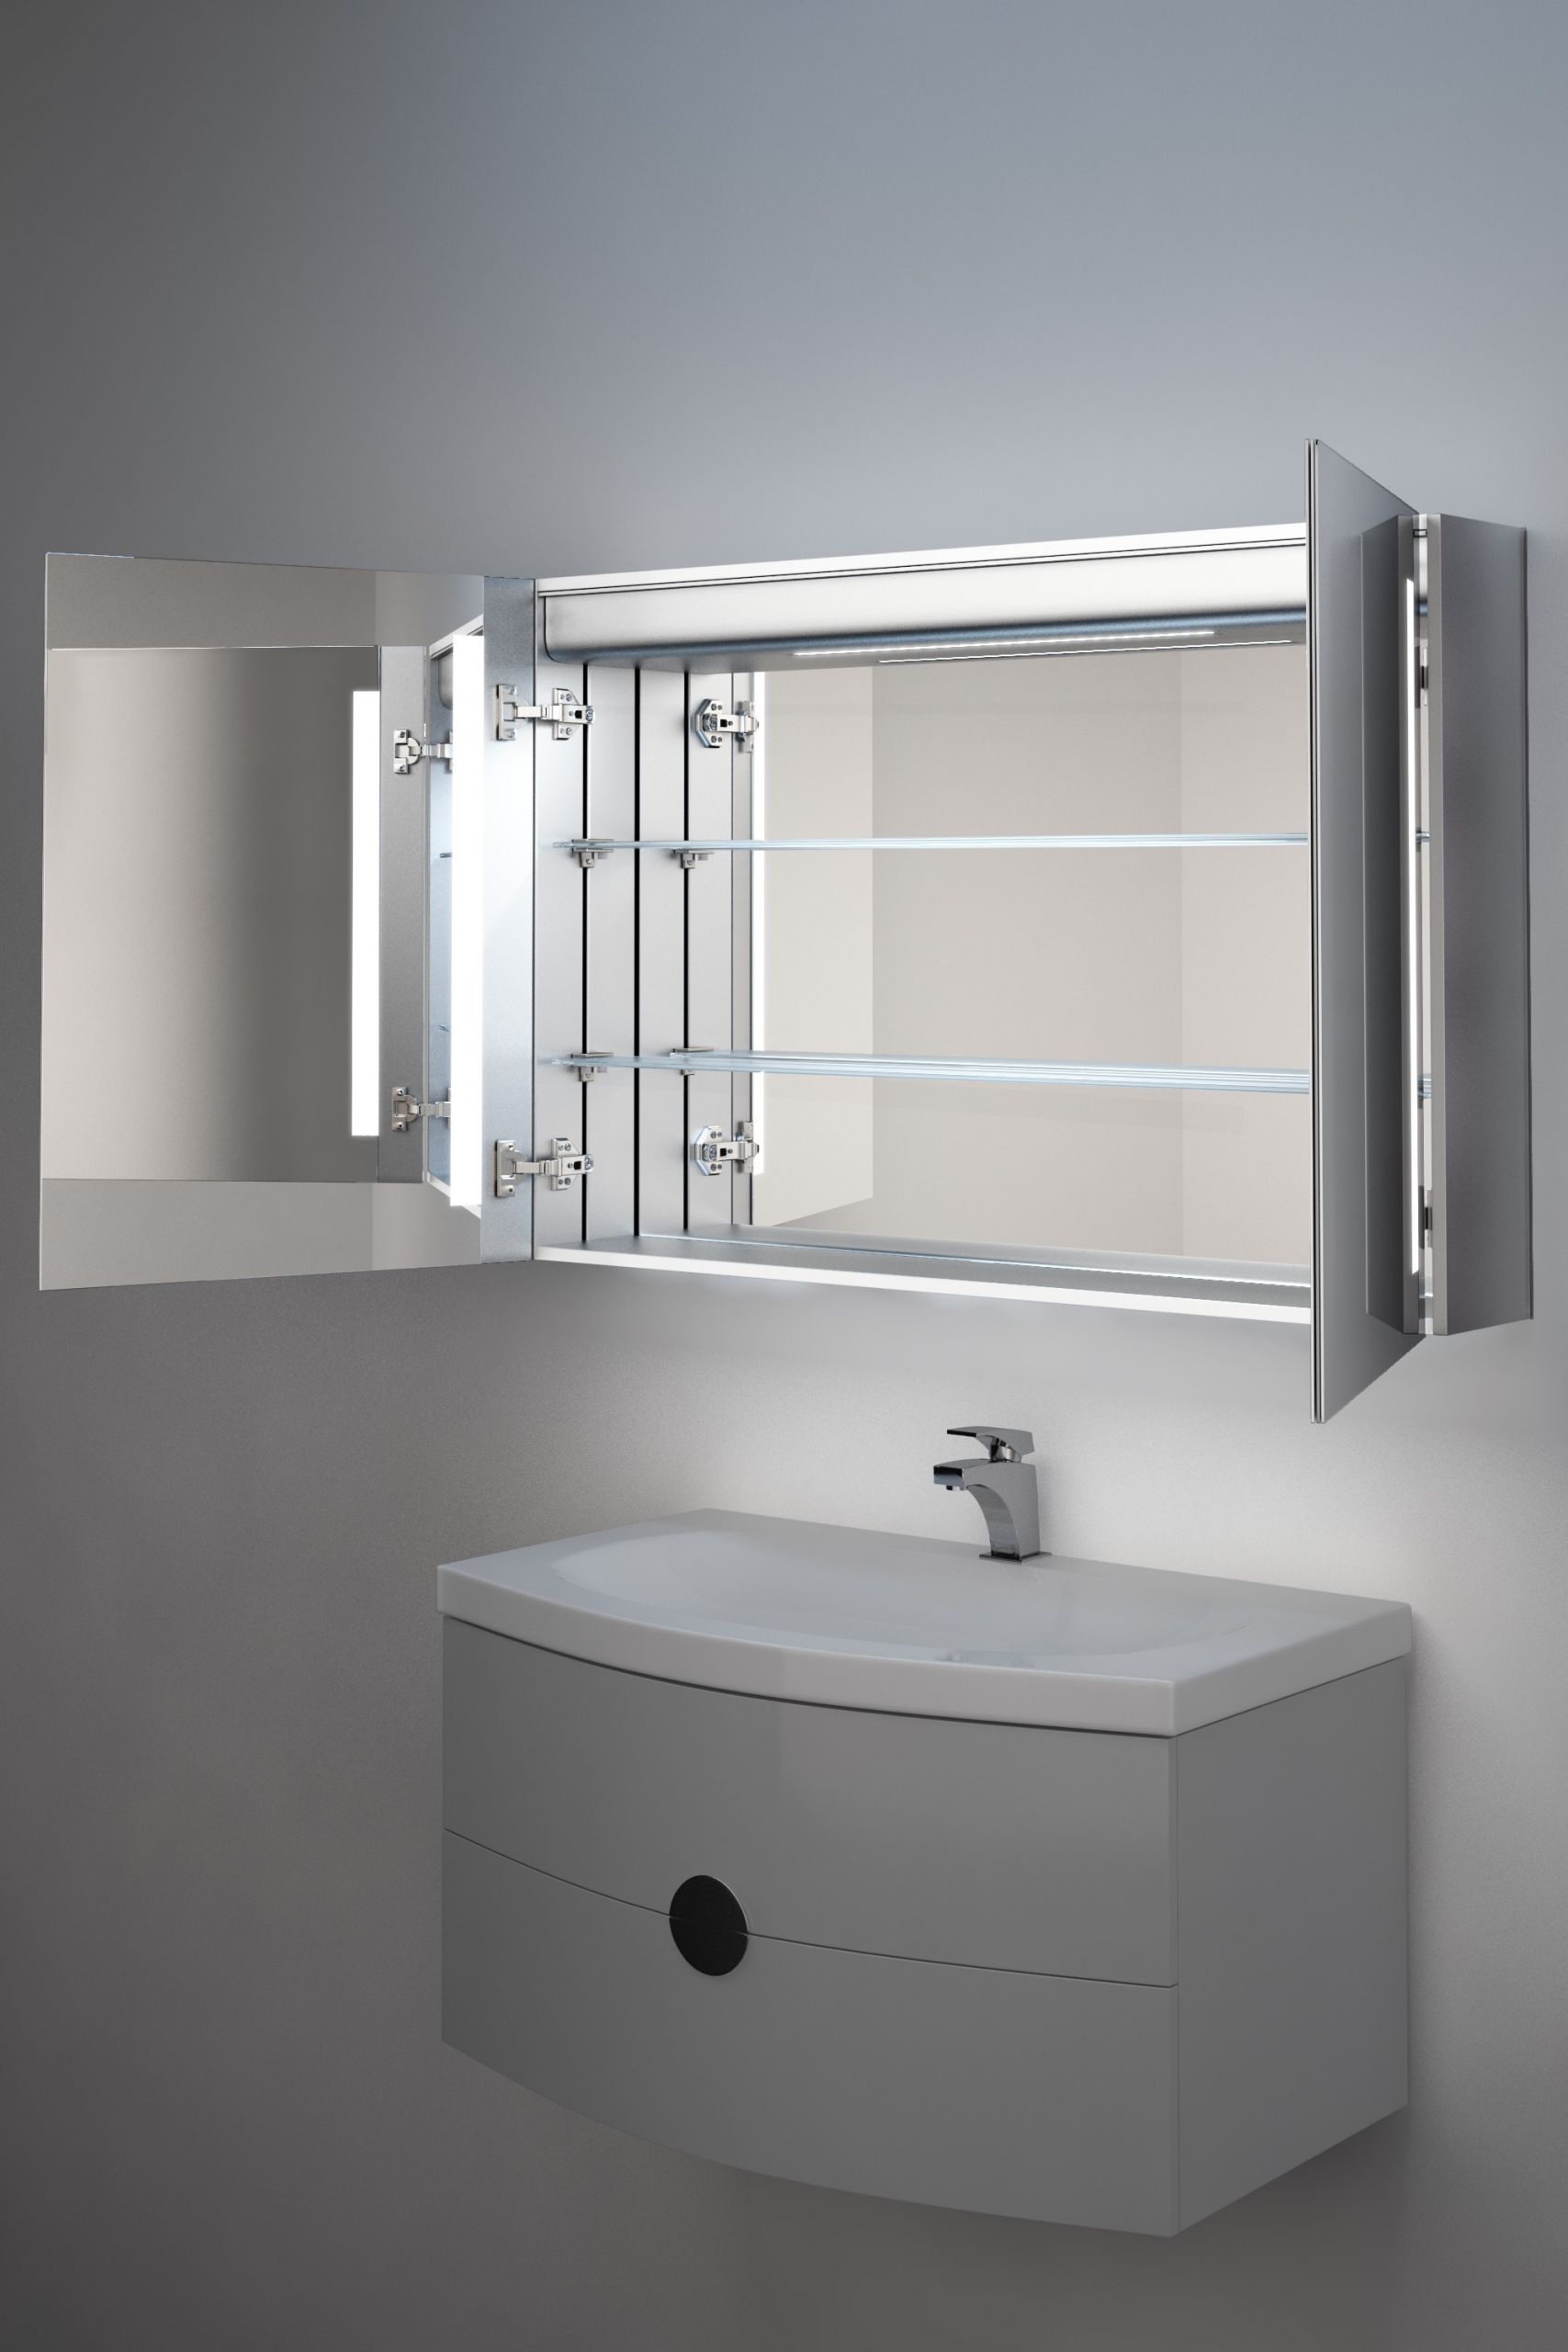 Bathroom Mirror Cabinet With Light
 Miraculous Mirror Cabinet 60 LED Light Illuminated